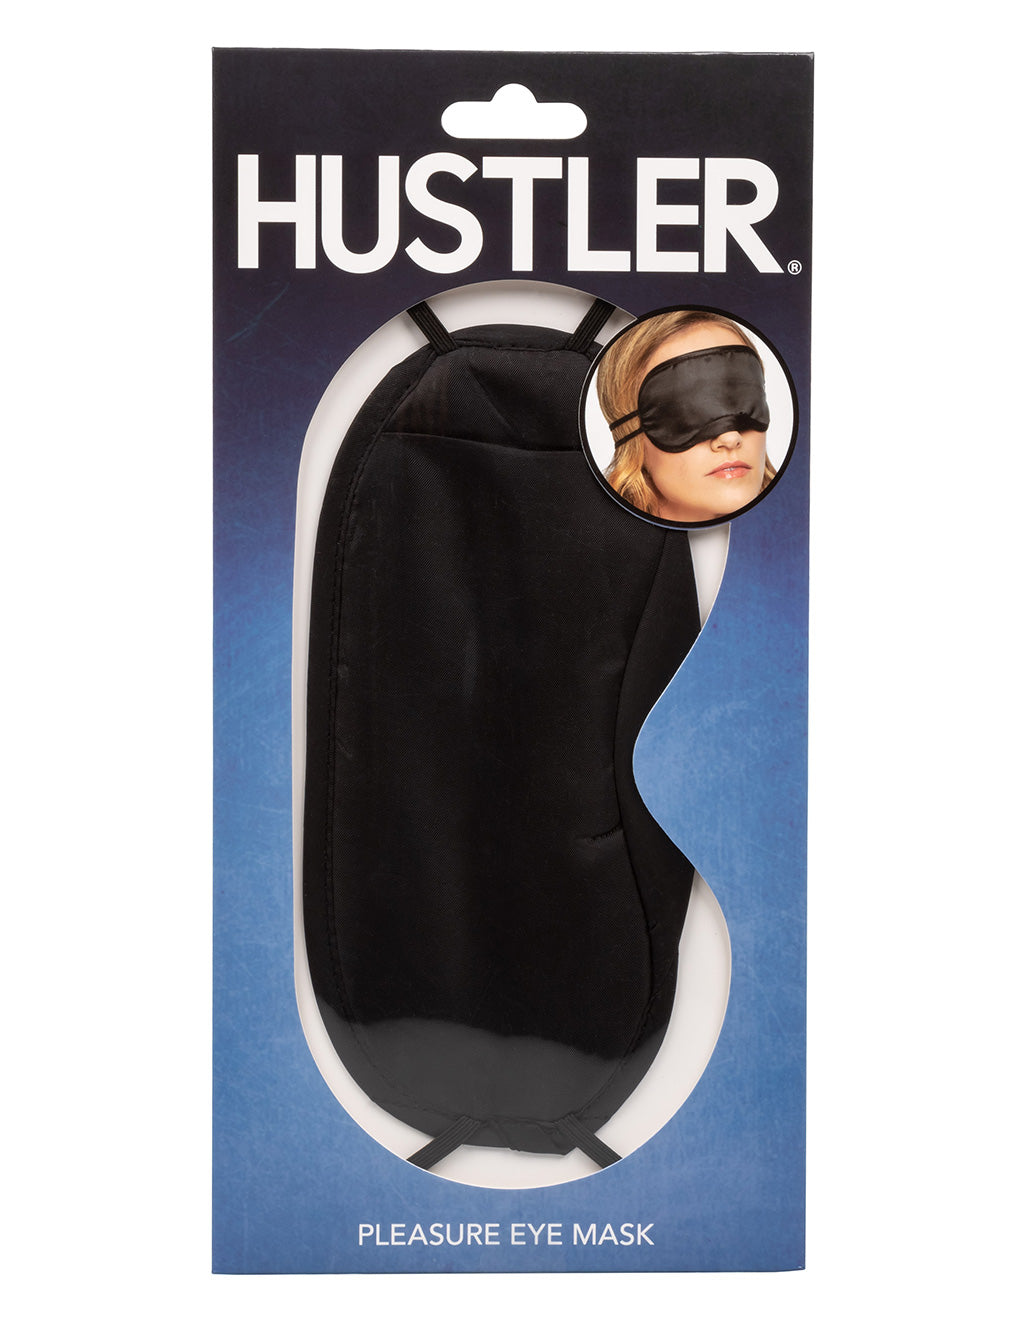 Hustler® Pleasure Eye Mask- Front package